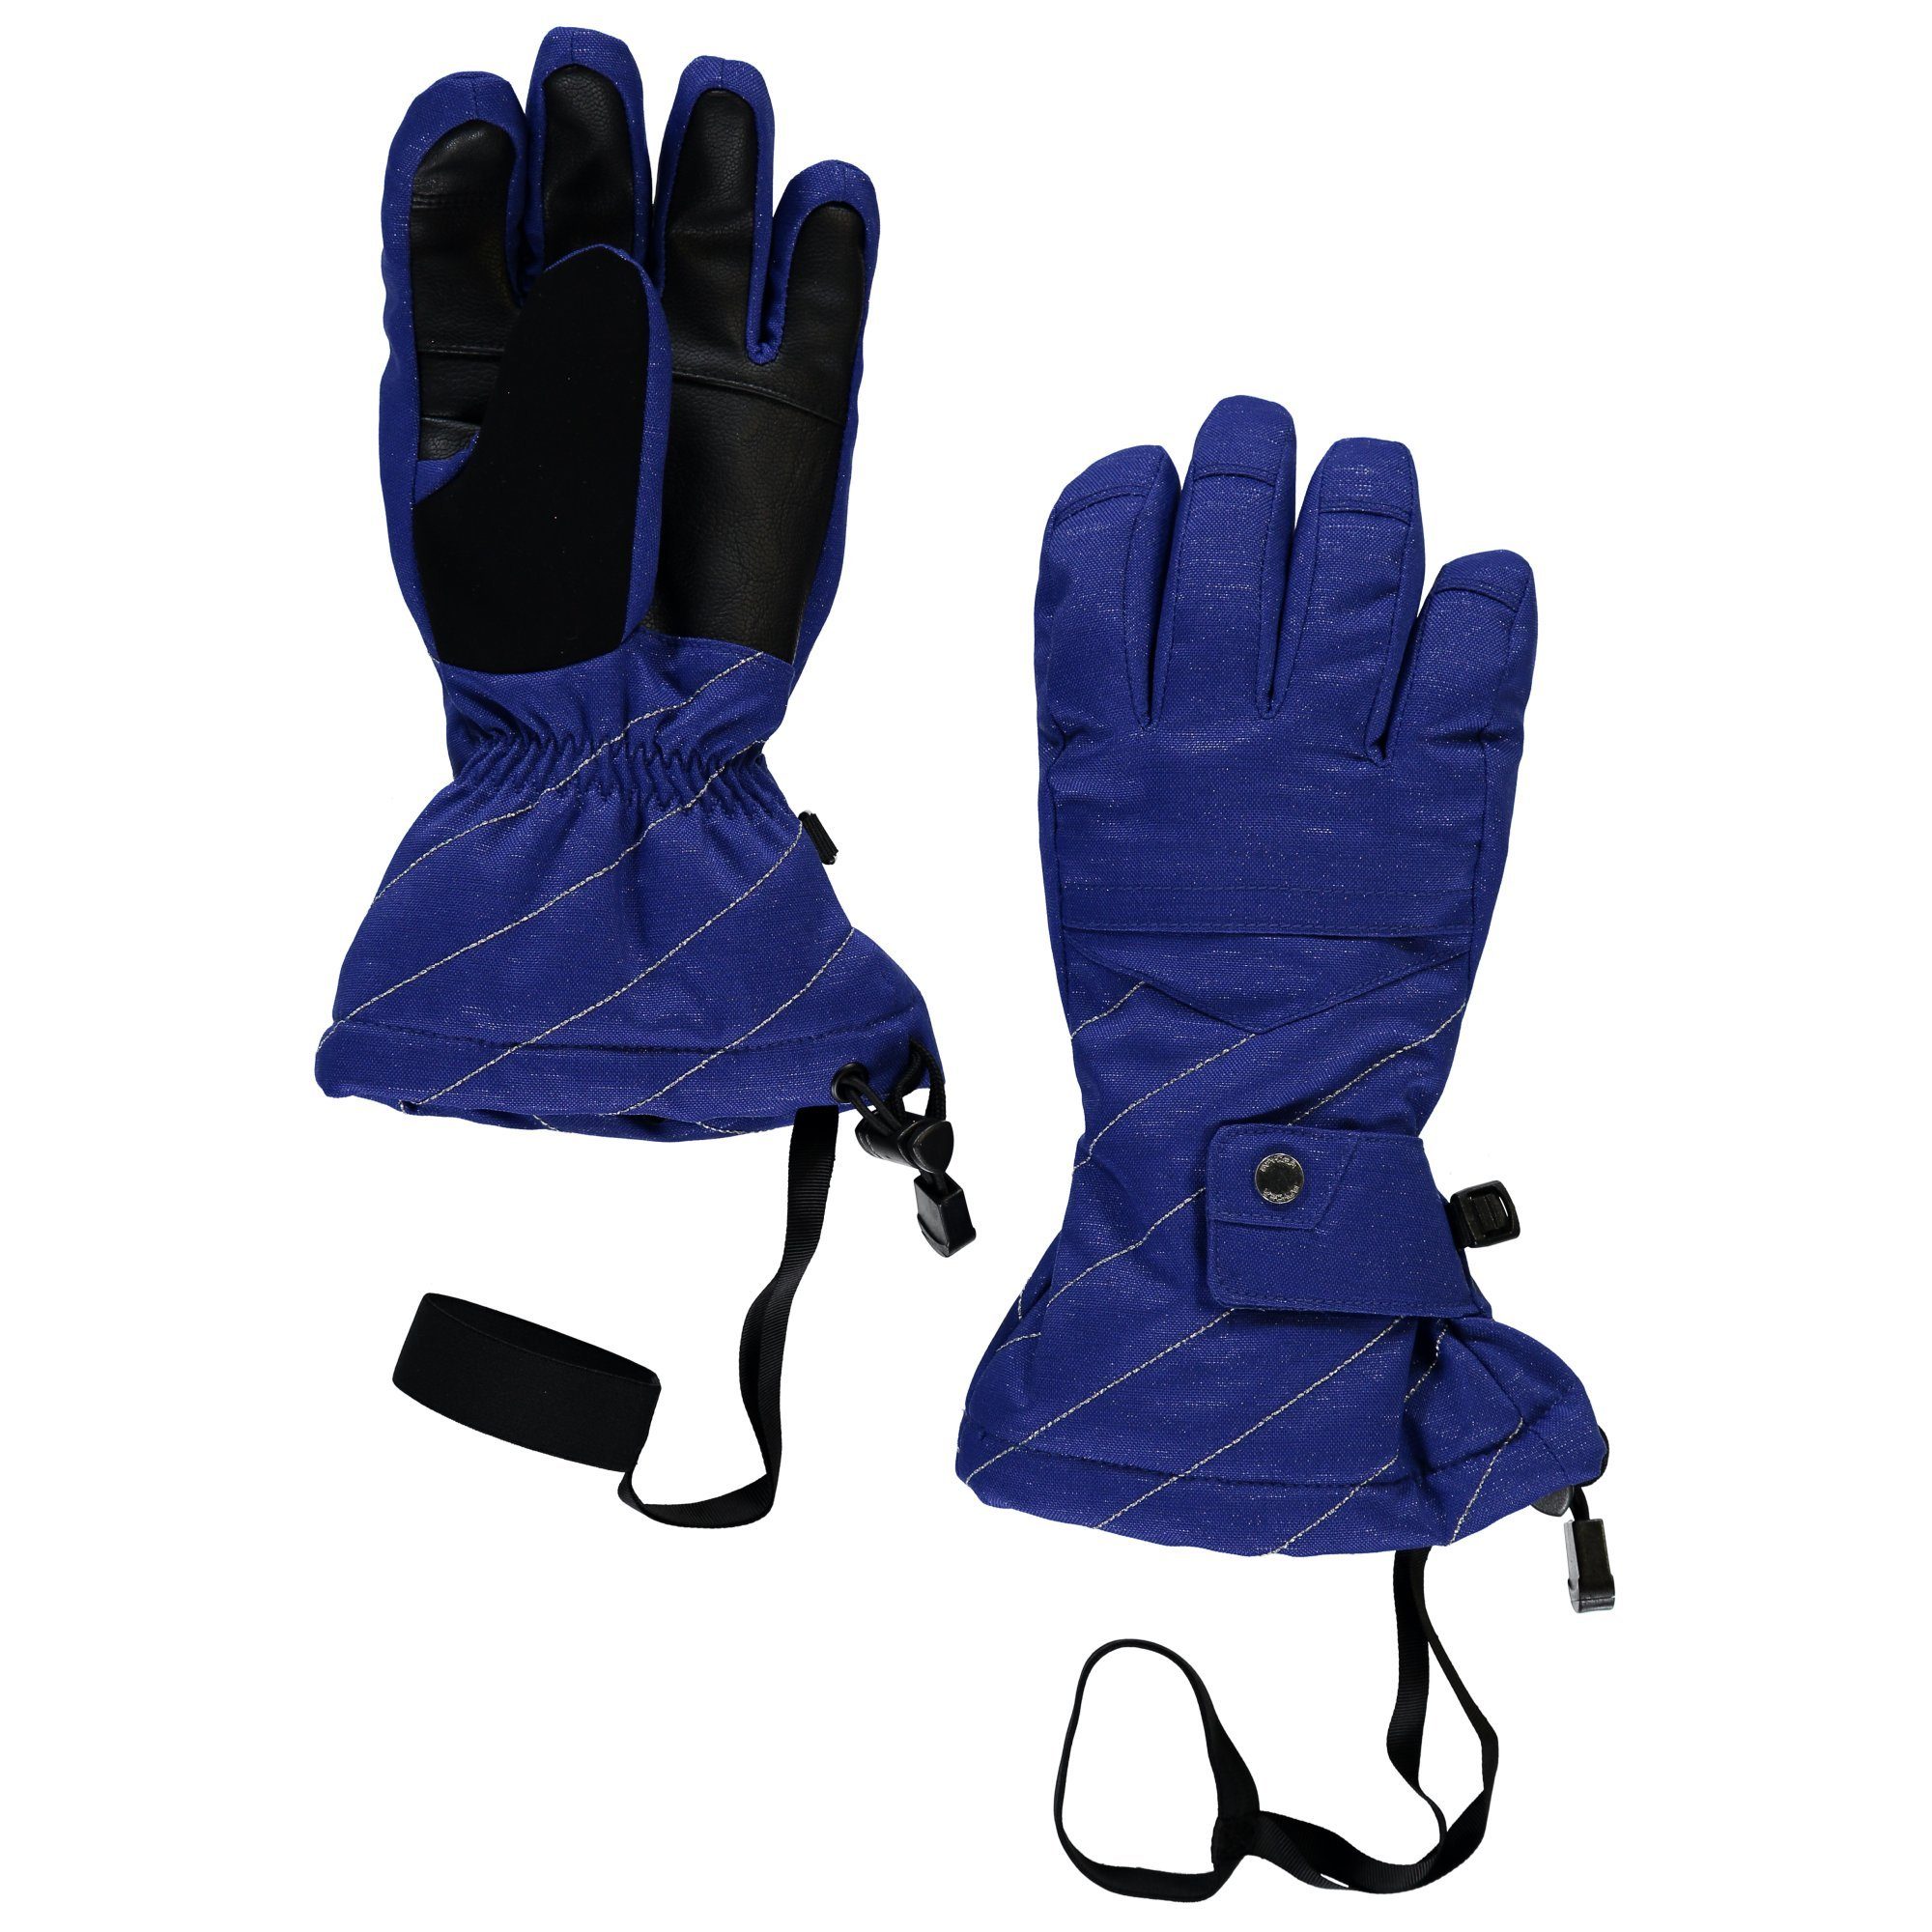 Spyder Skihandschuhe SYNTHESIS Ski Handschuhe